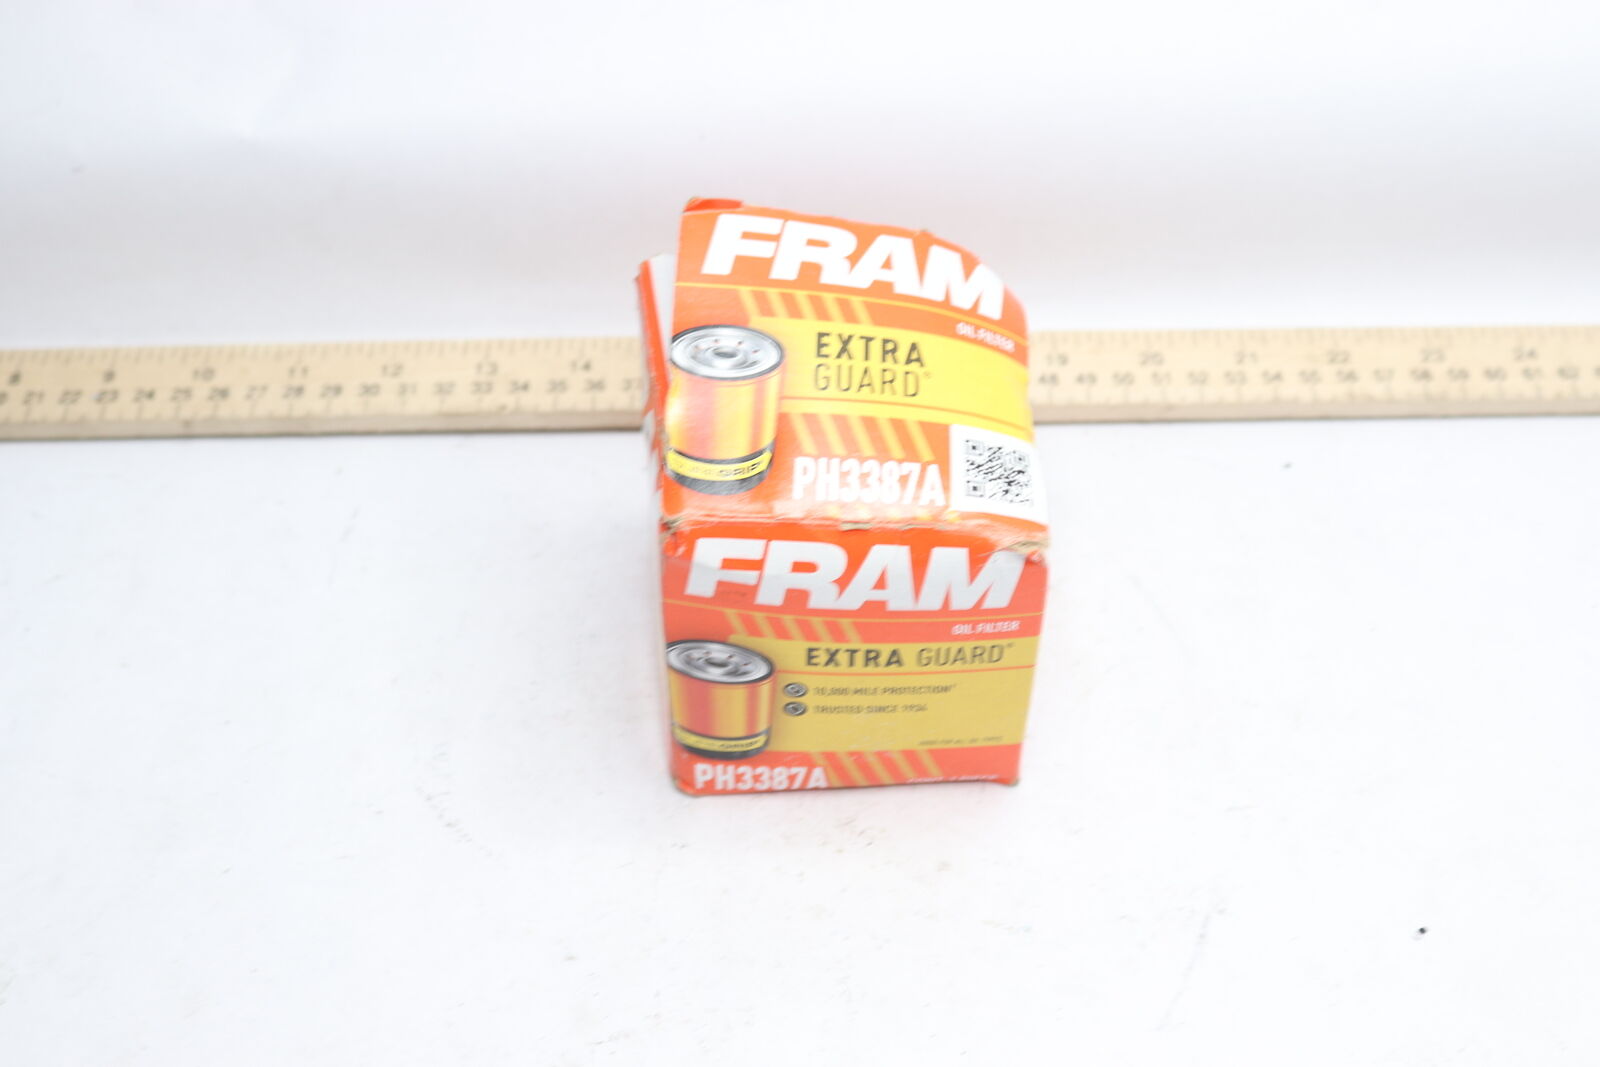 Fram Extra Guard Spin-On Oil Filter PH3387A